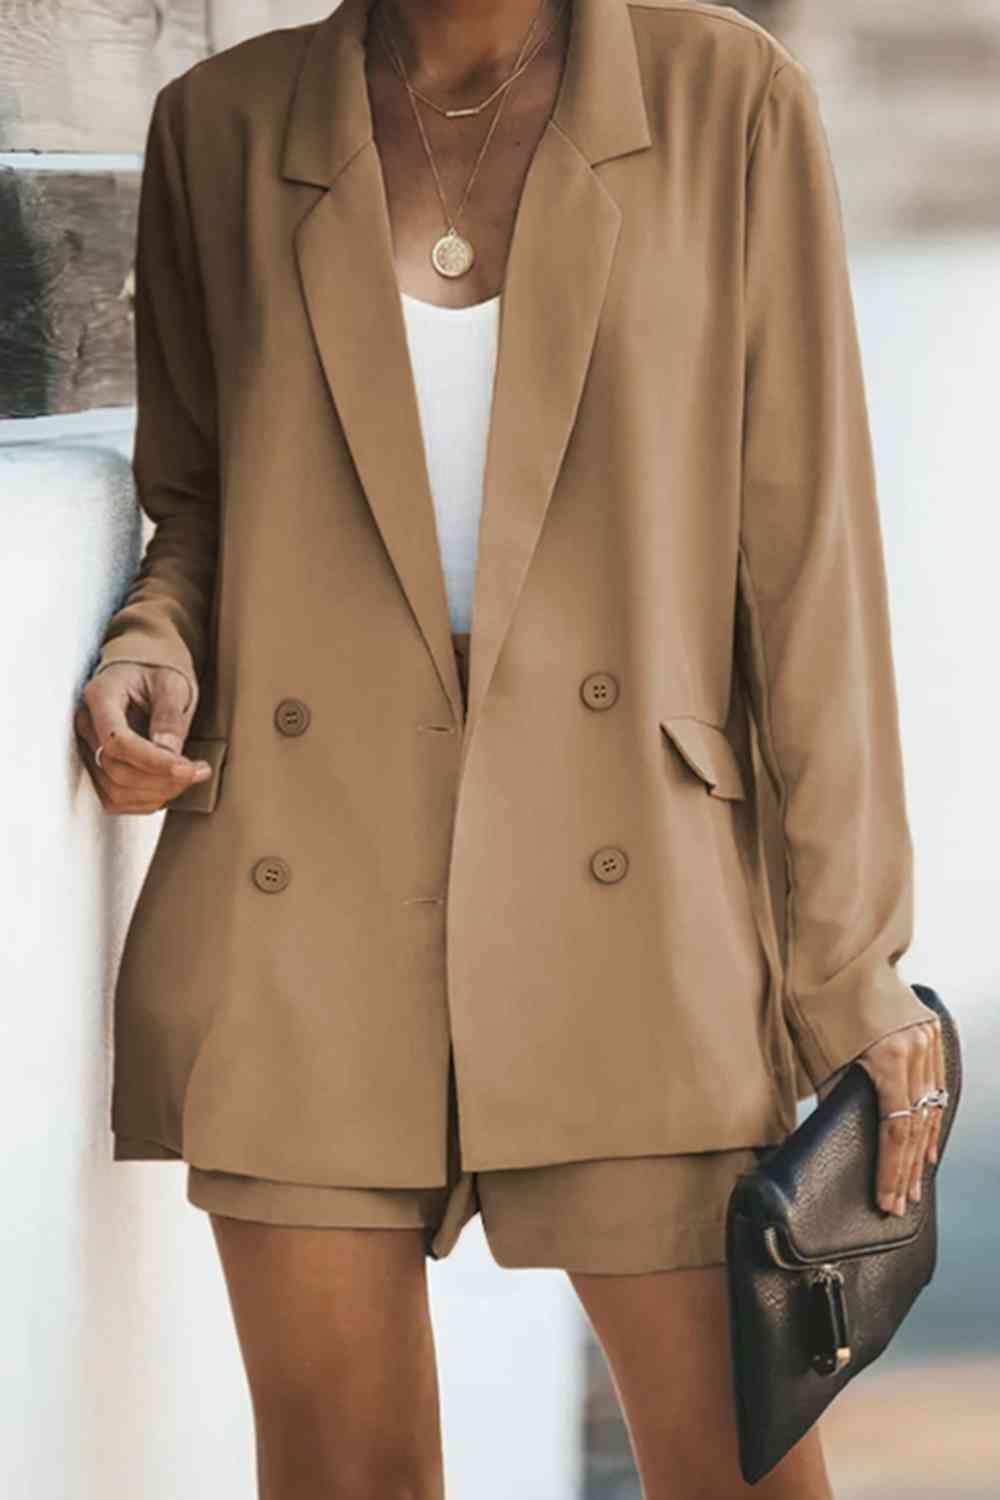 a woman wearing a tan blazer and shorts